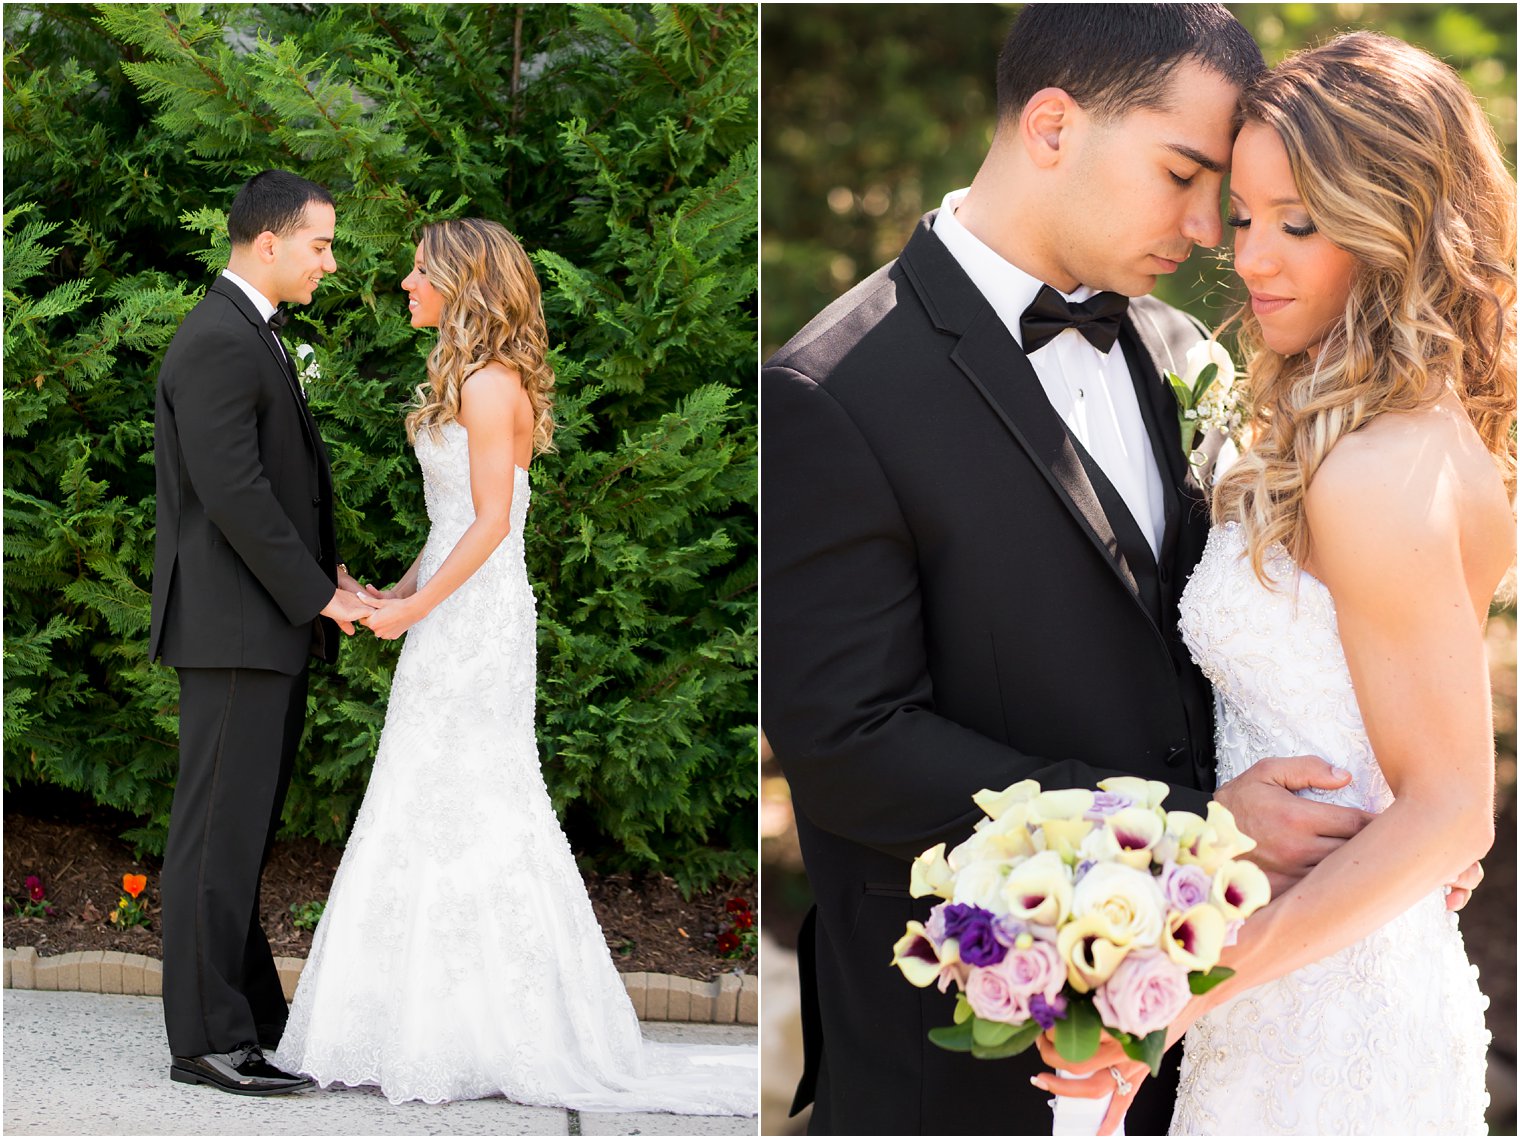 Romantic bride and groom photos | Photos by Idalia Photography